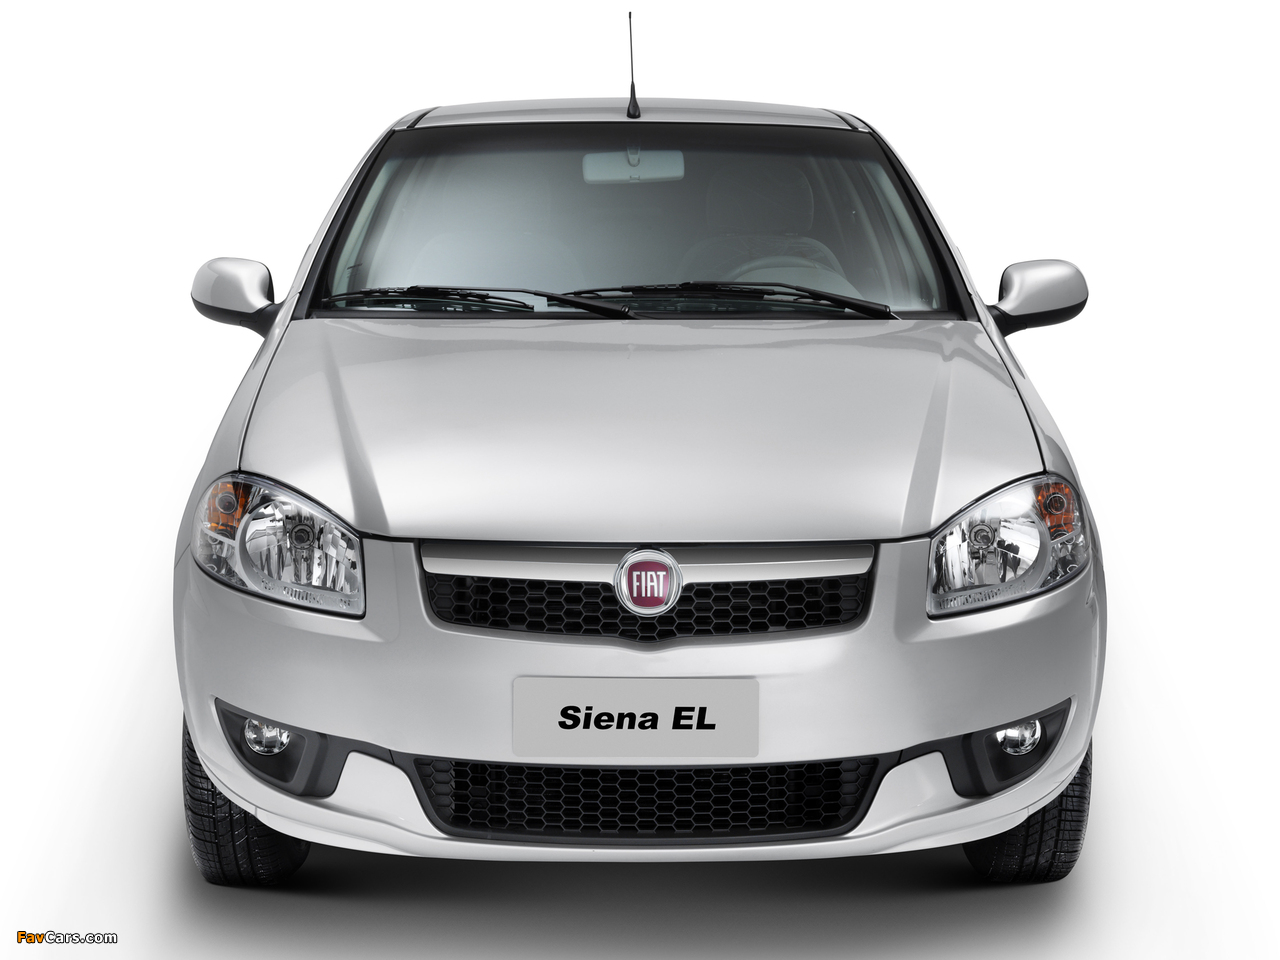 Fiat Siena EL (178) 2012 pictures (1280 x 960)